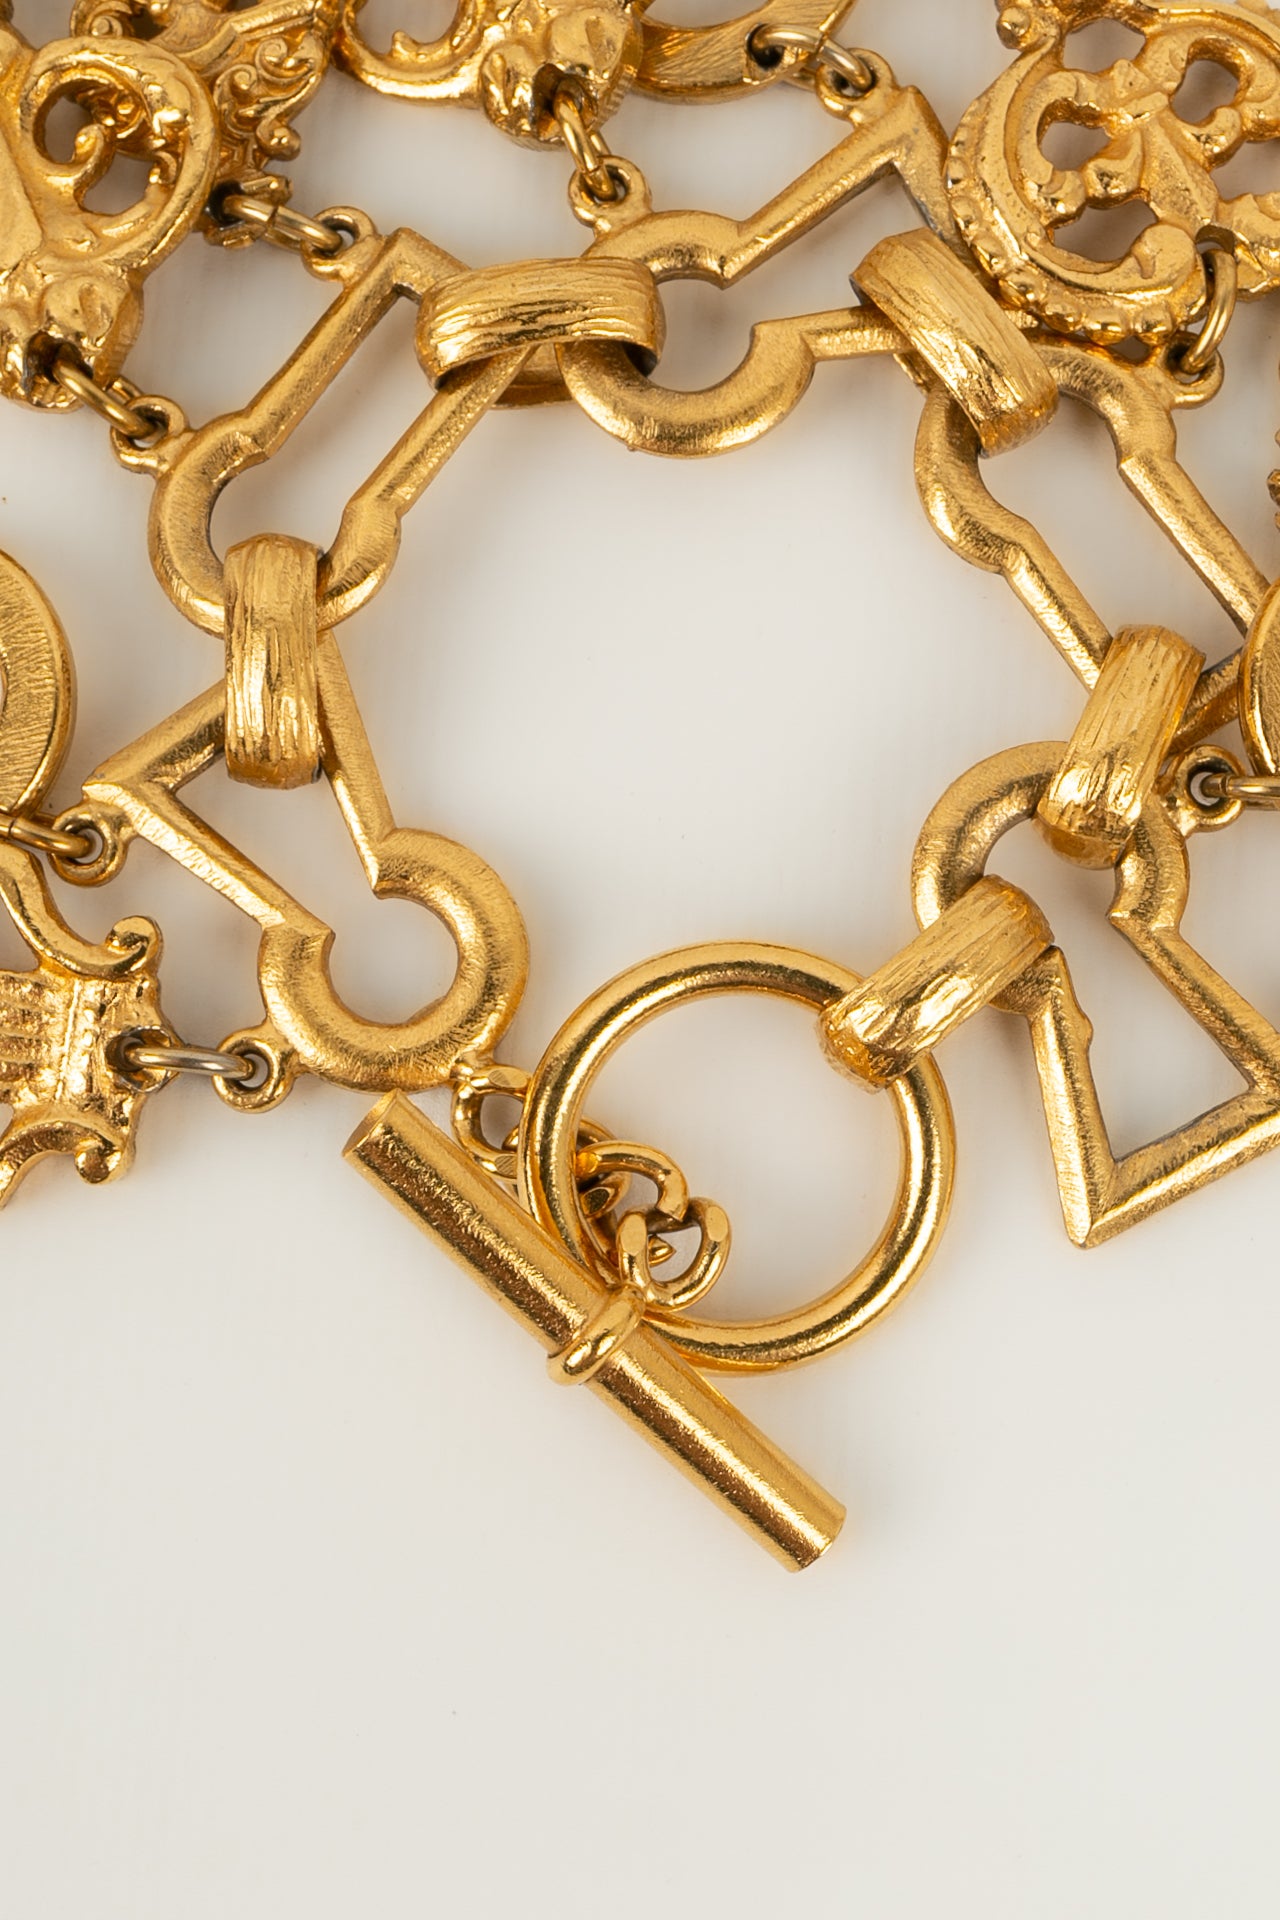 Iconic Chanel bracelet keys 1993